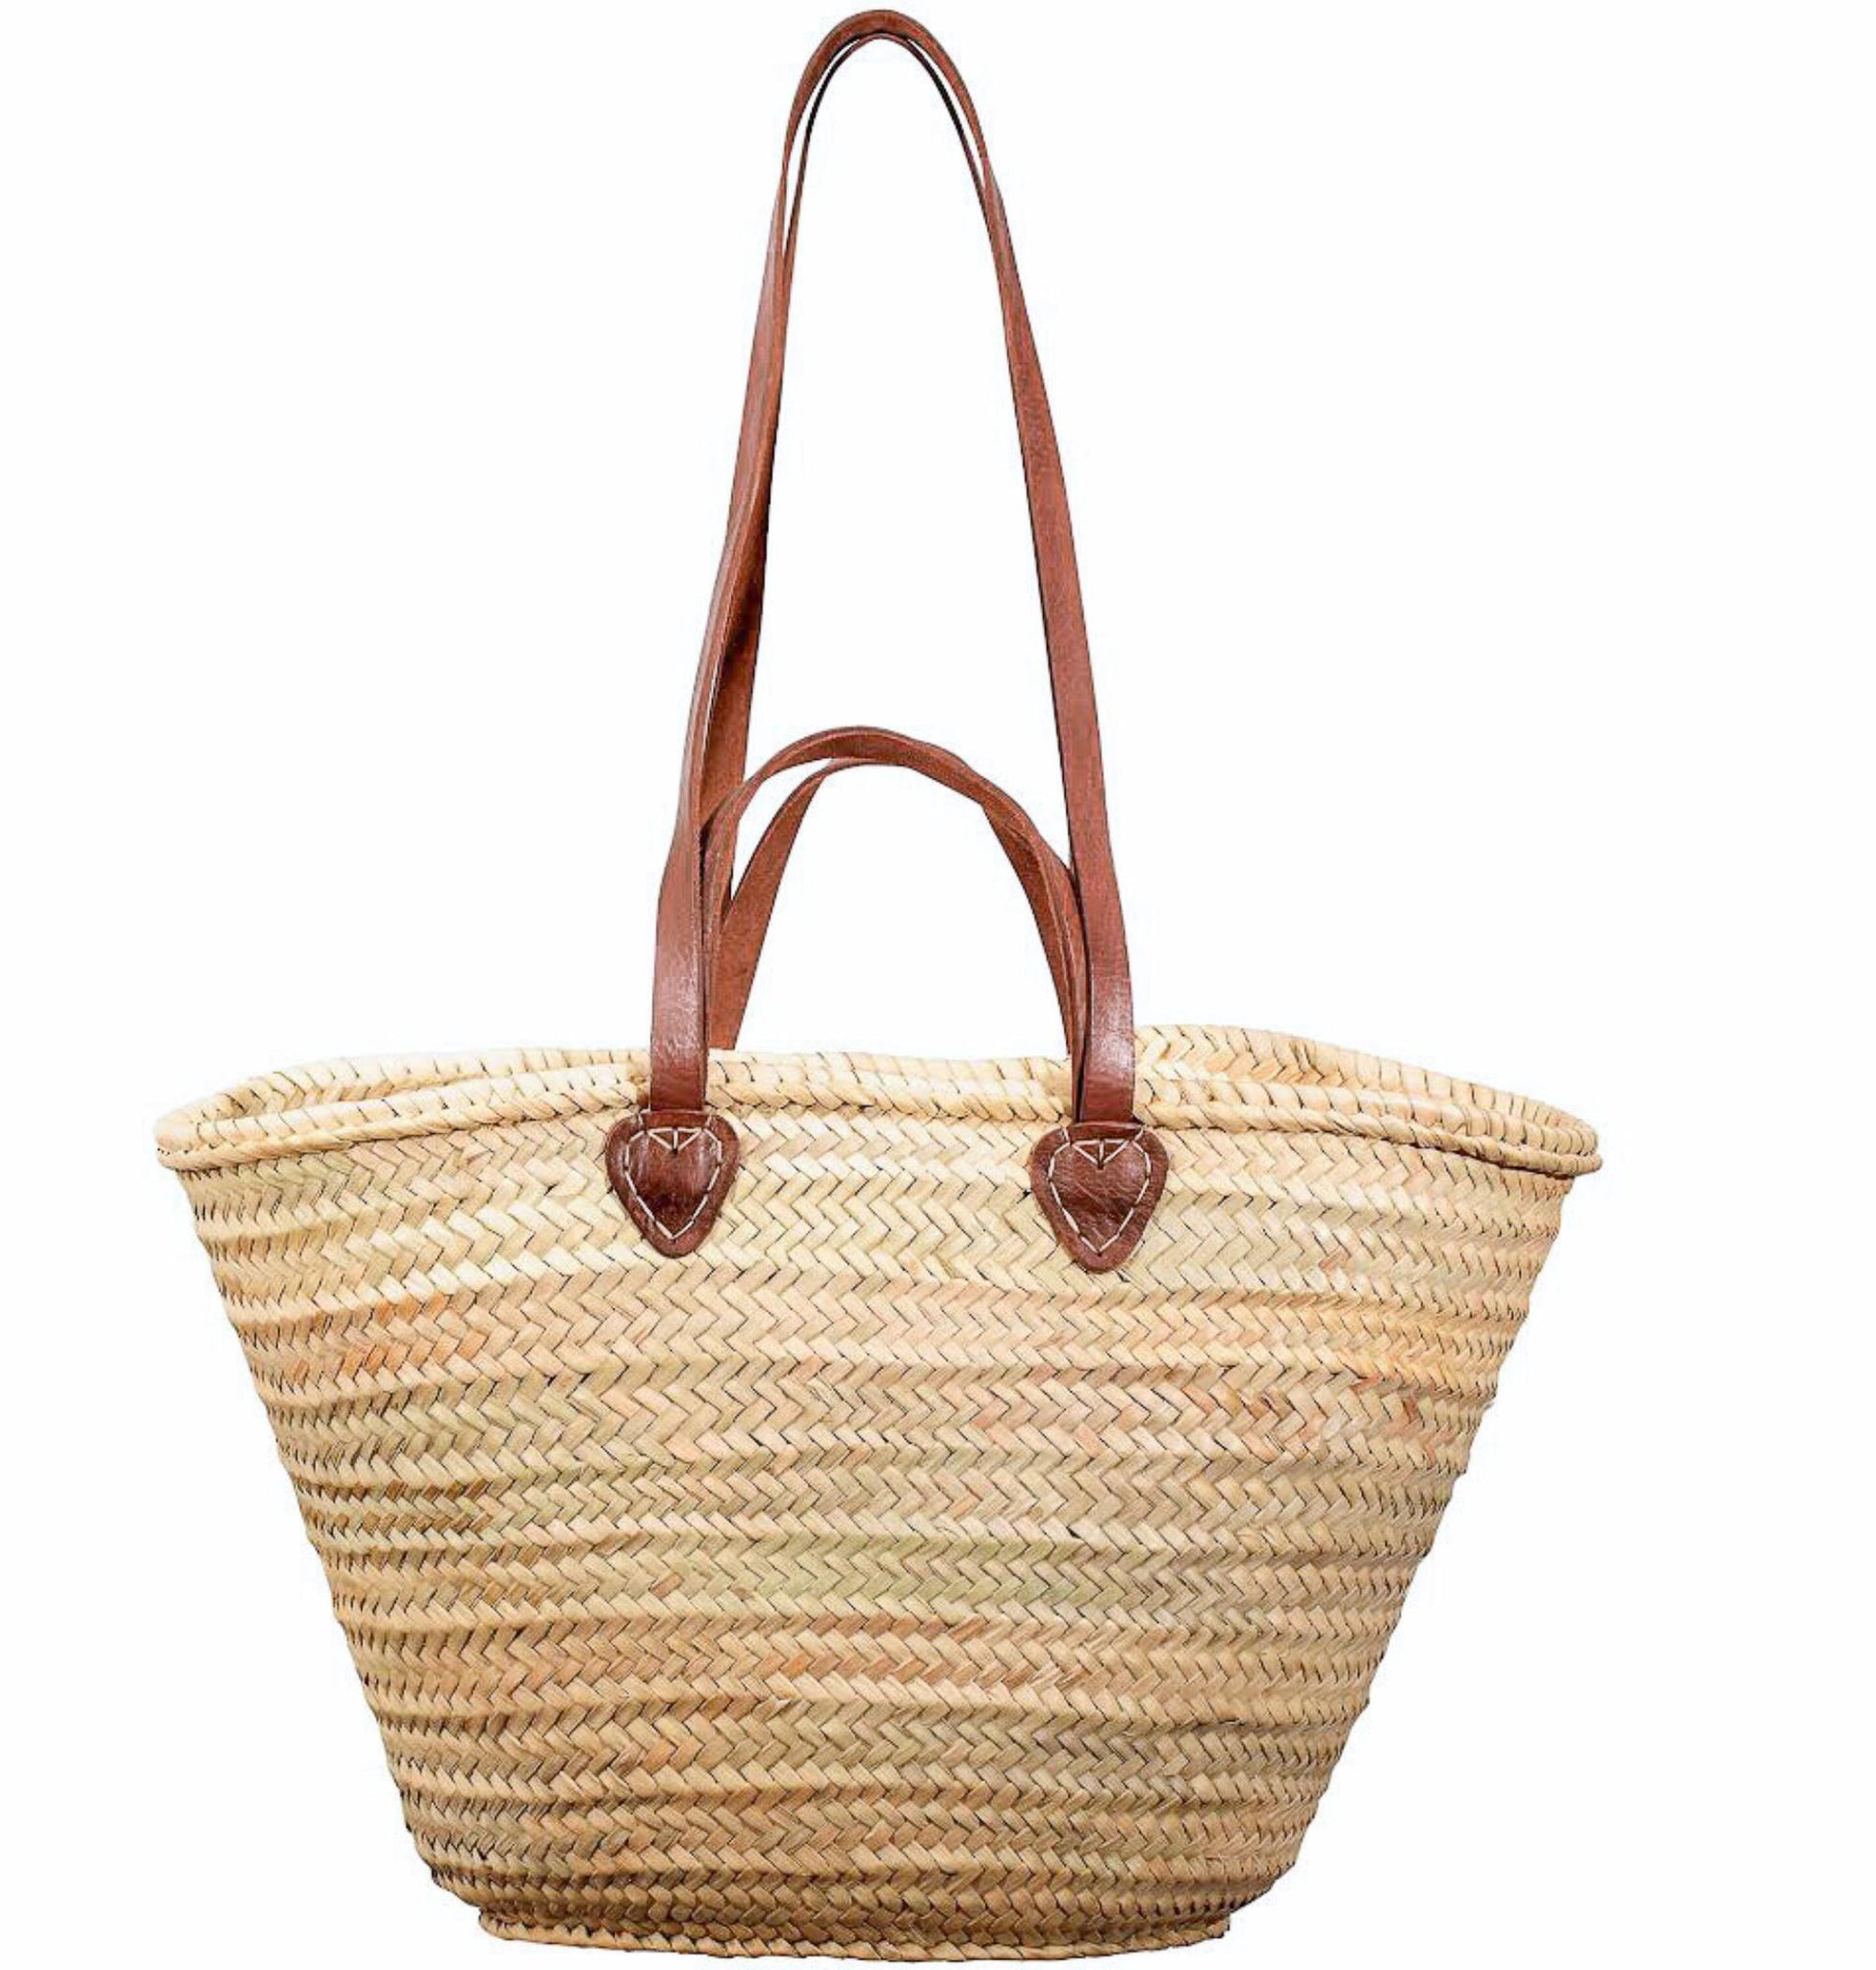 Long Leather Handle Straw Basket - Chestnut